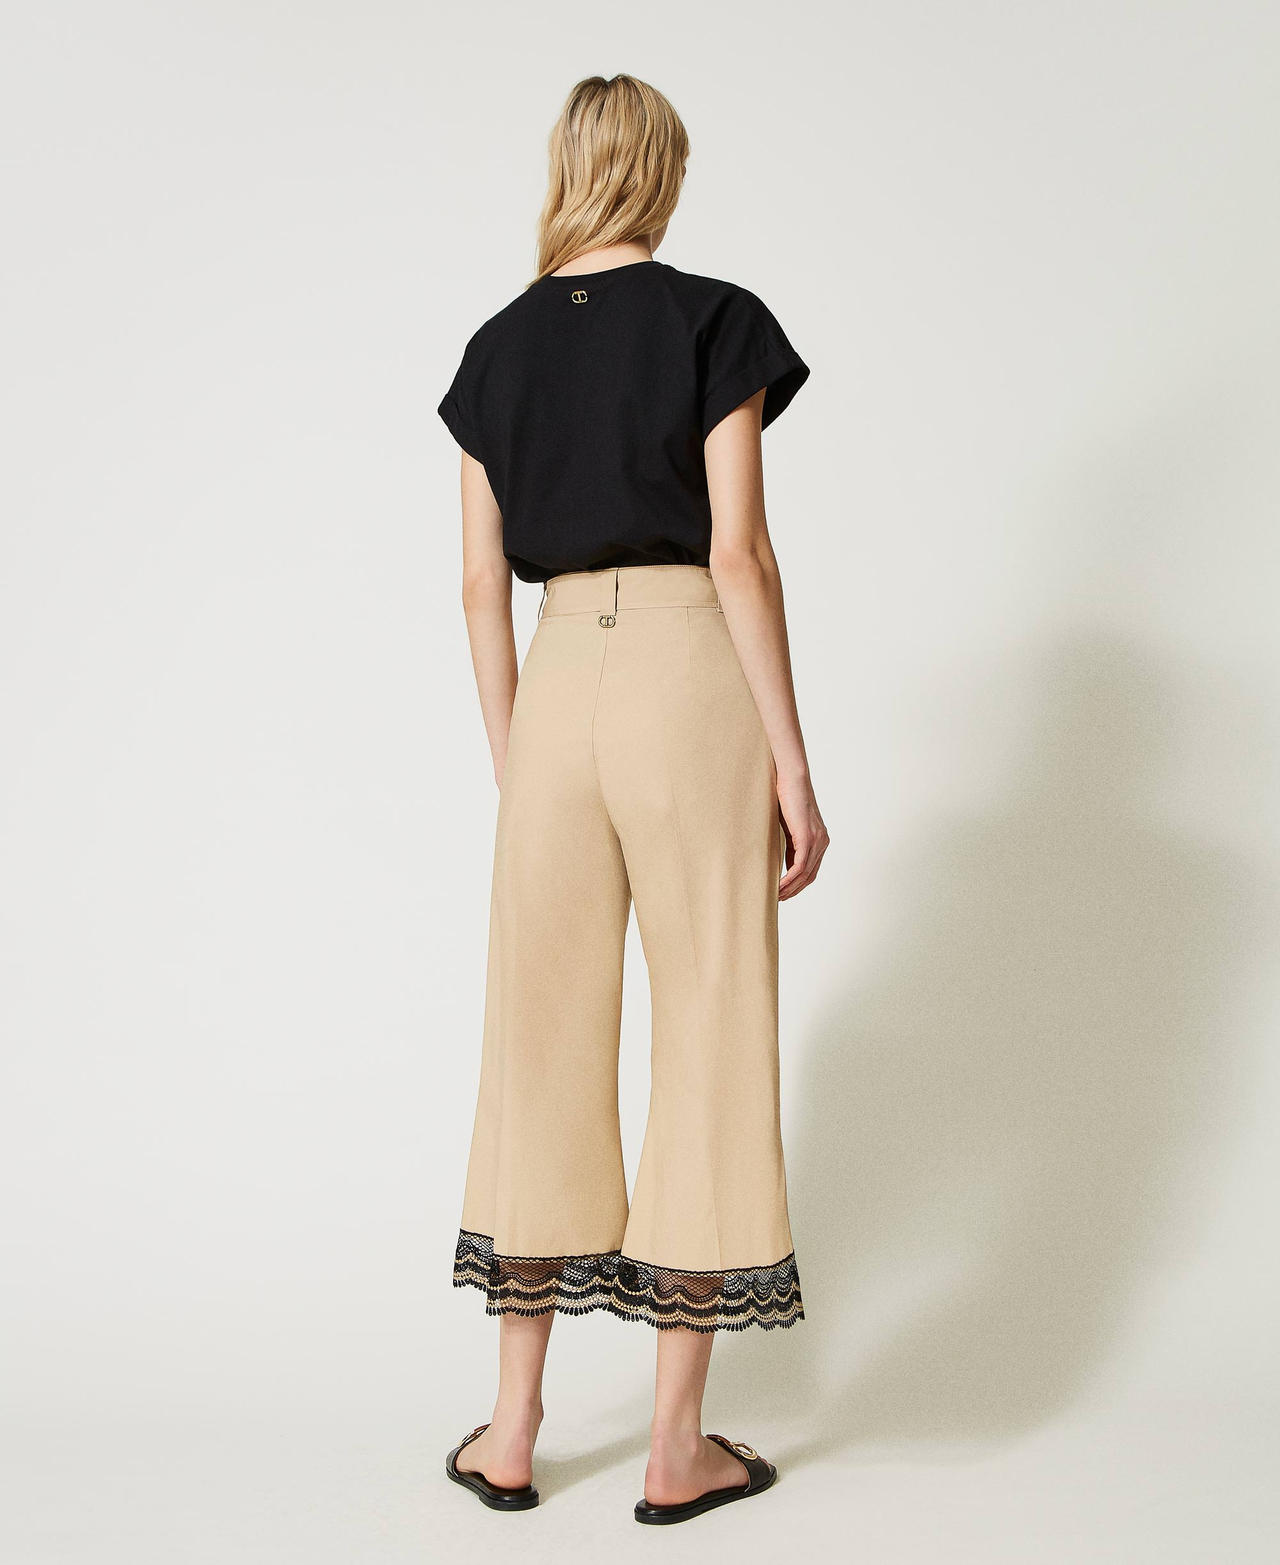 Pantalon cropped en popeline avec dentelle bicolore Broderie Beige/Noir Femme 231TT2128-03